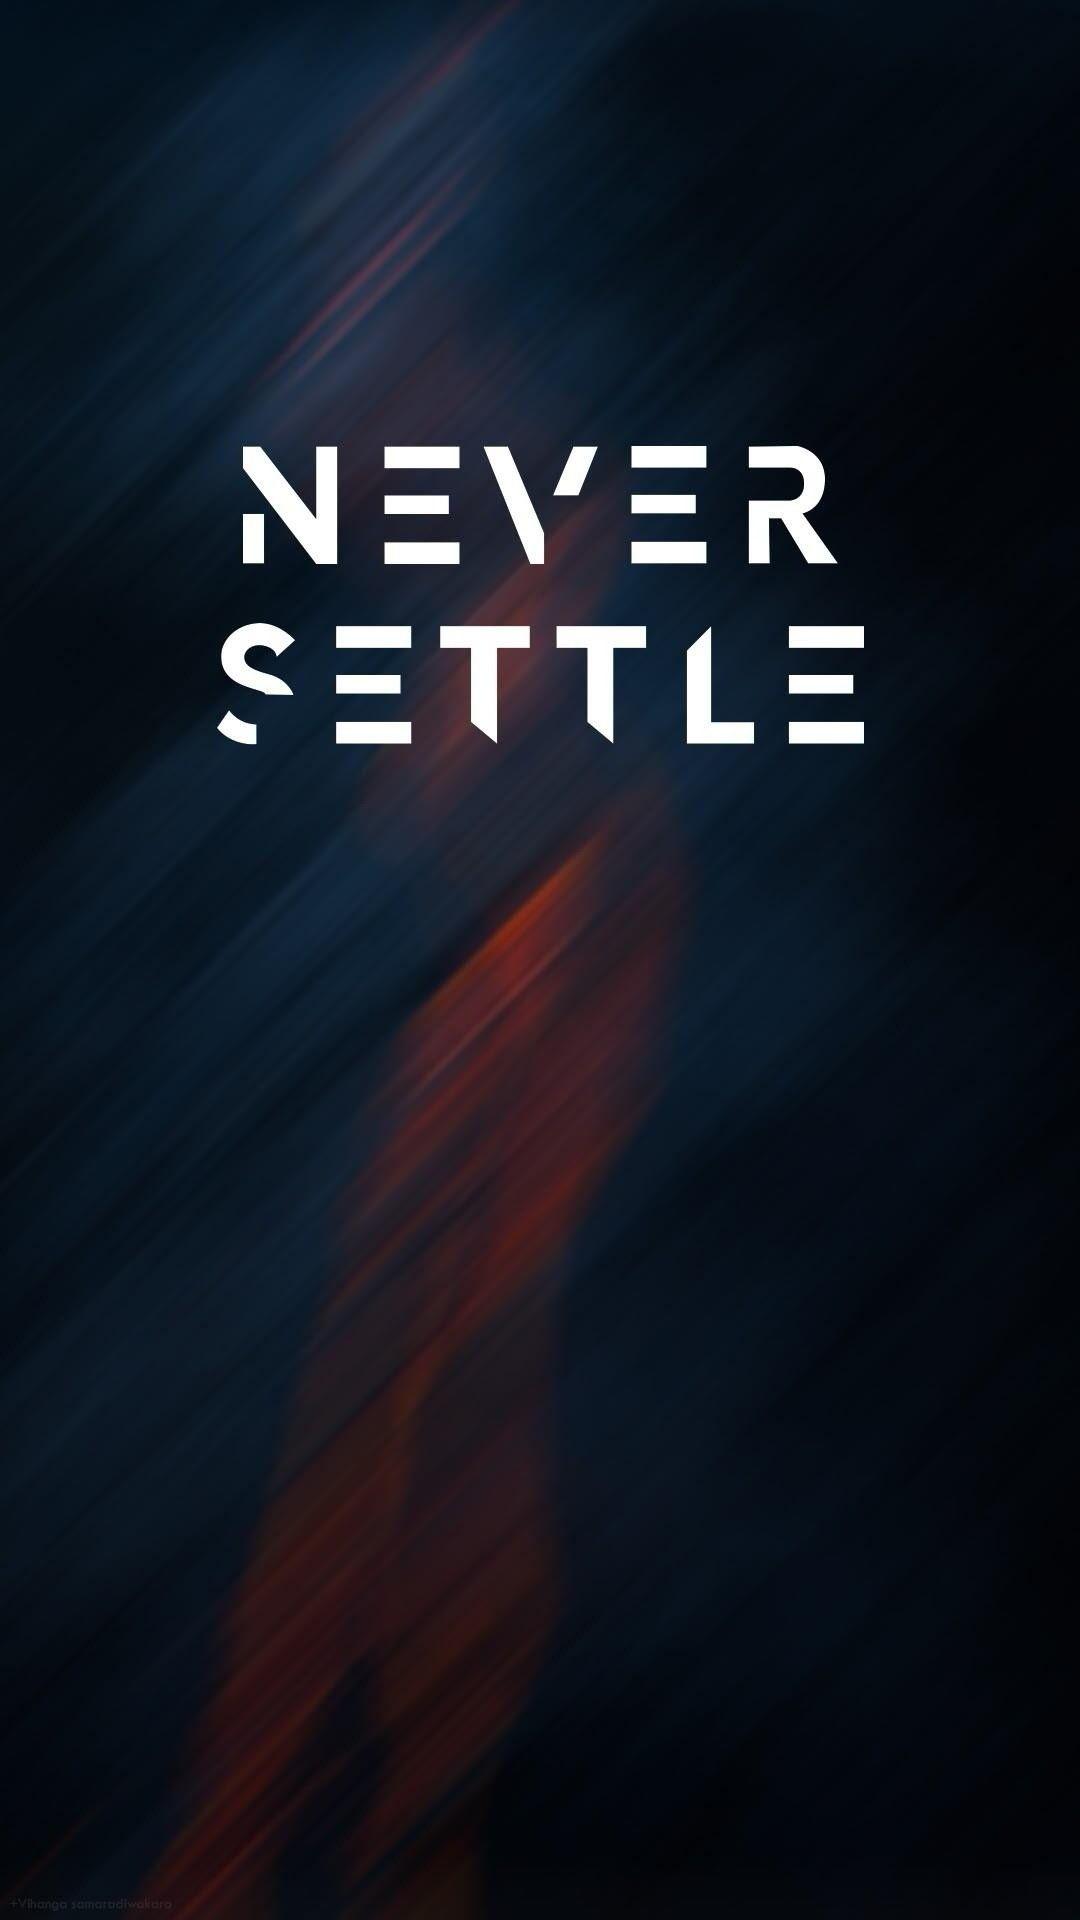 Never settle. HD phone wallpaper, Oneplus wallpaper